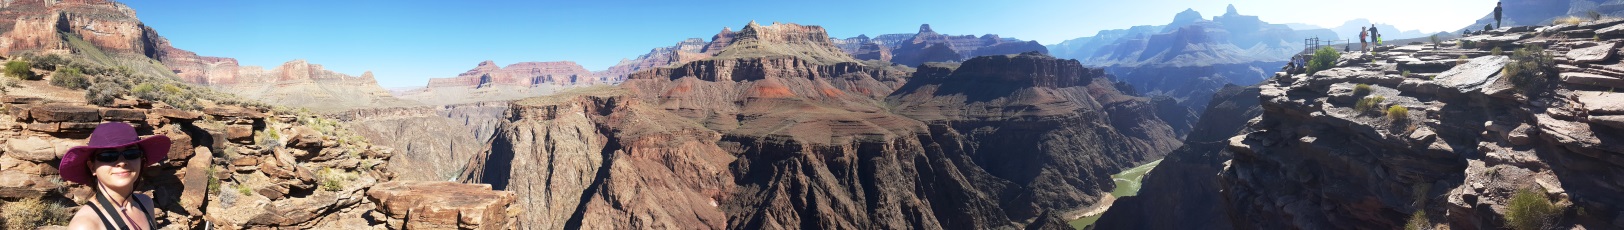 Grand Canyon Plateau Point